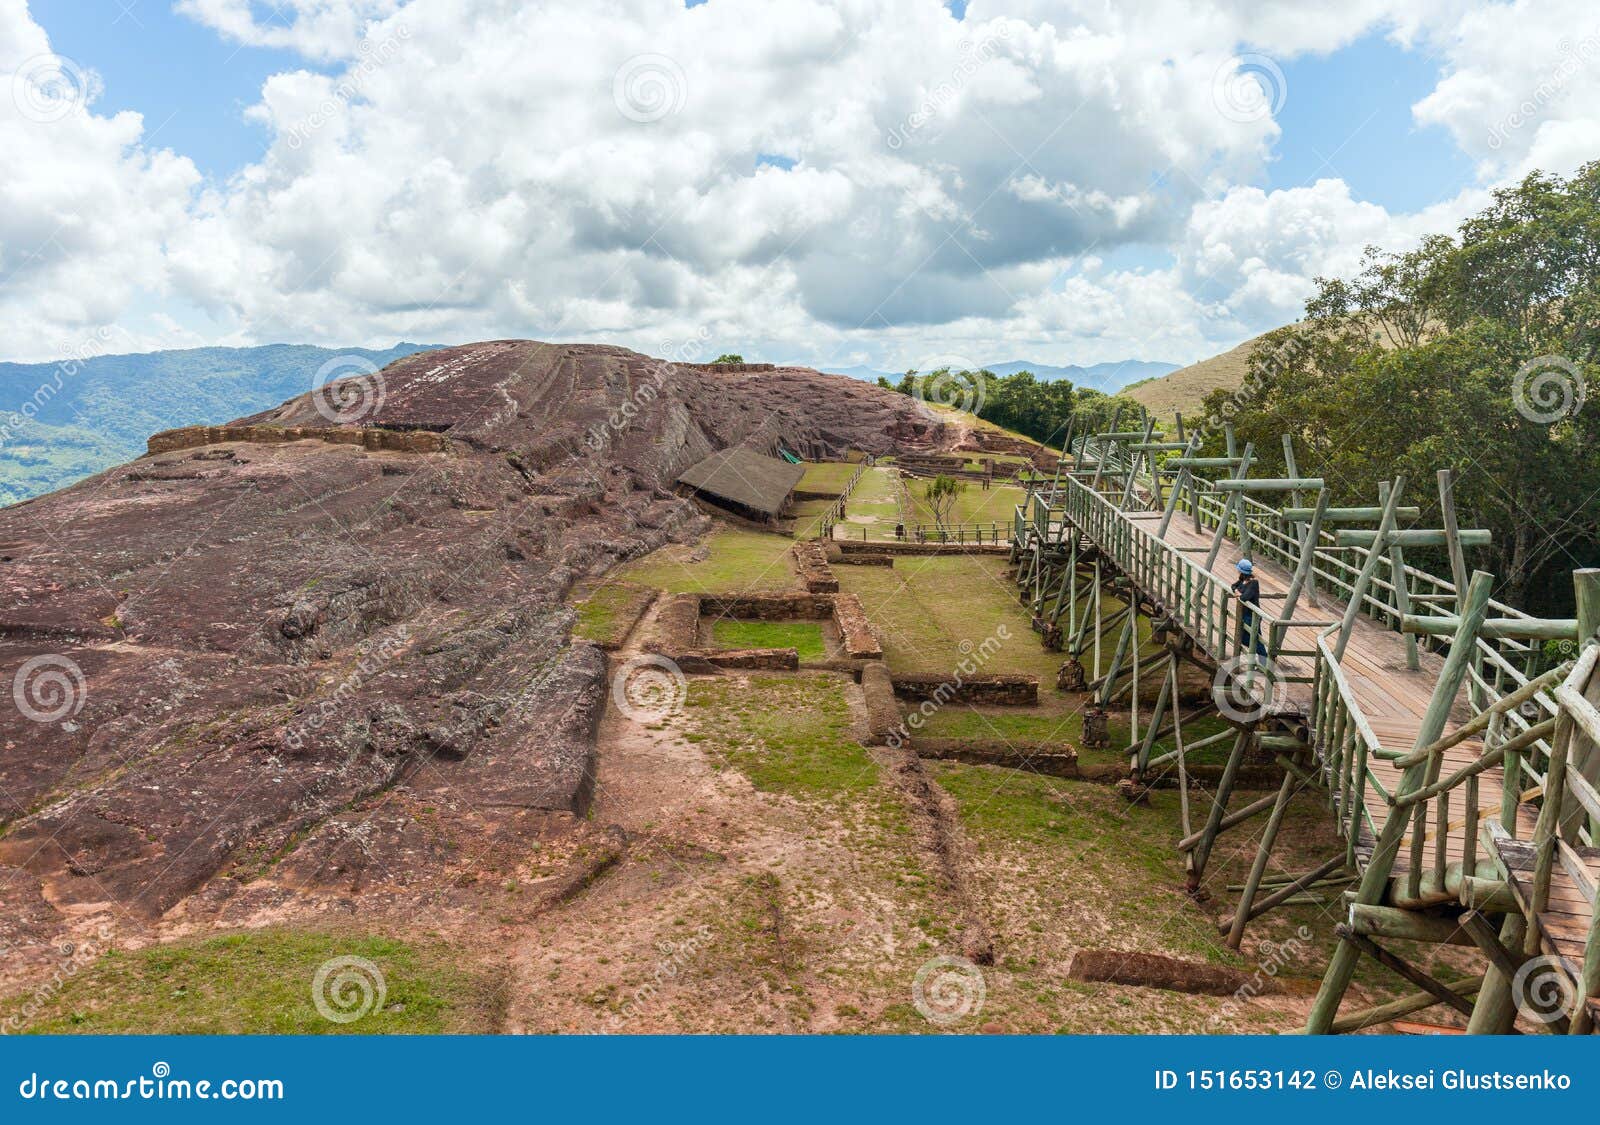 traces and remnants of an ancient civilization. archaeological site of el fuerte de samaipata, bolivia